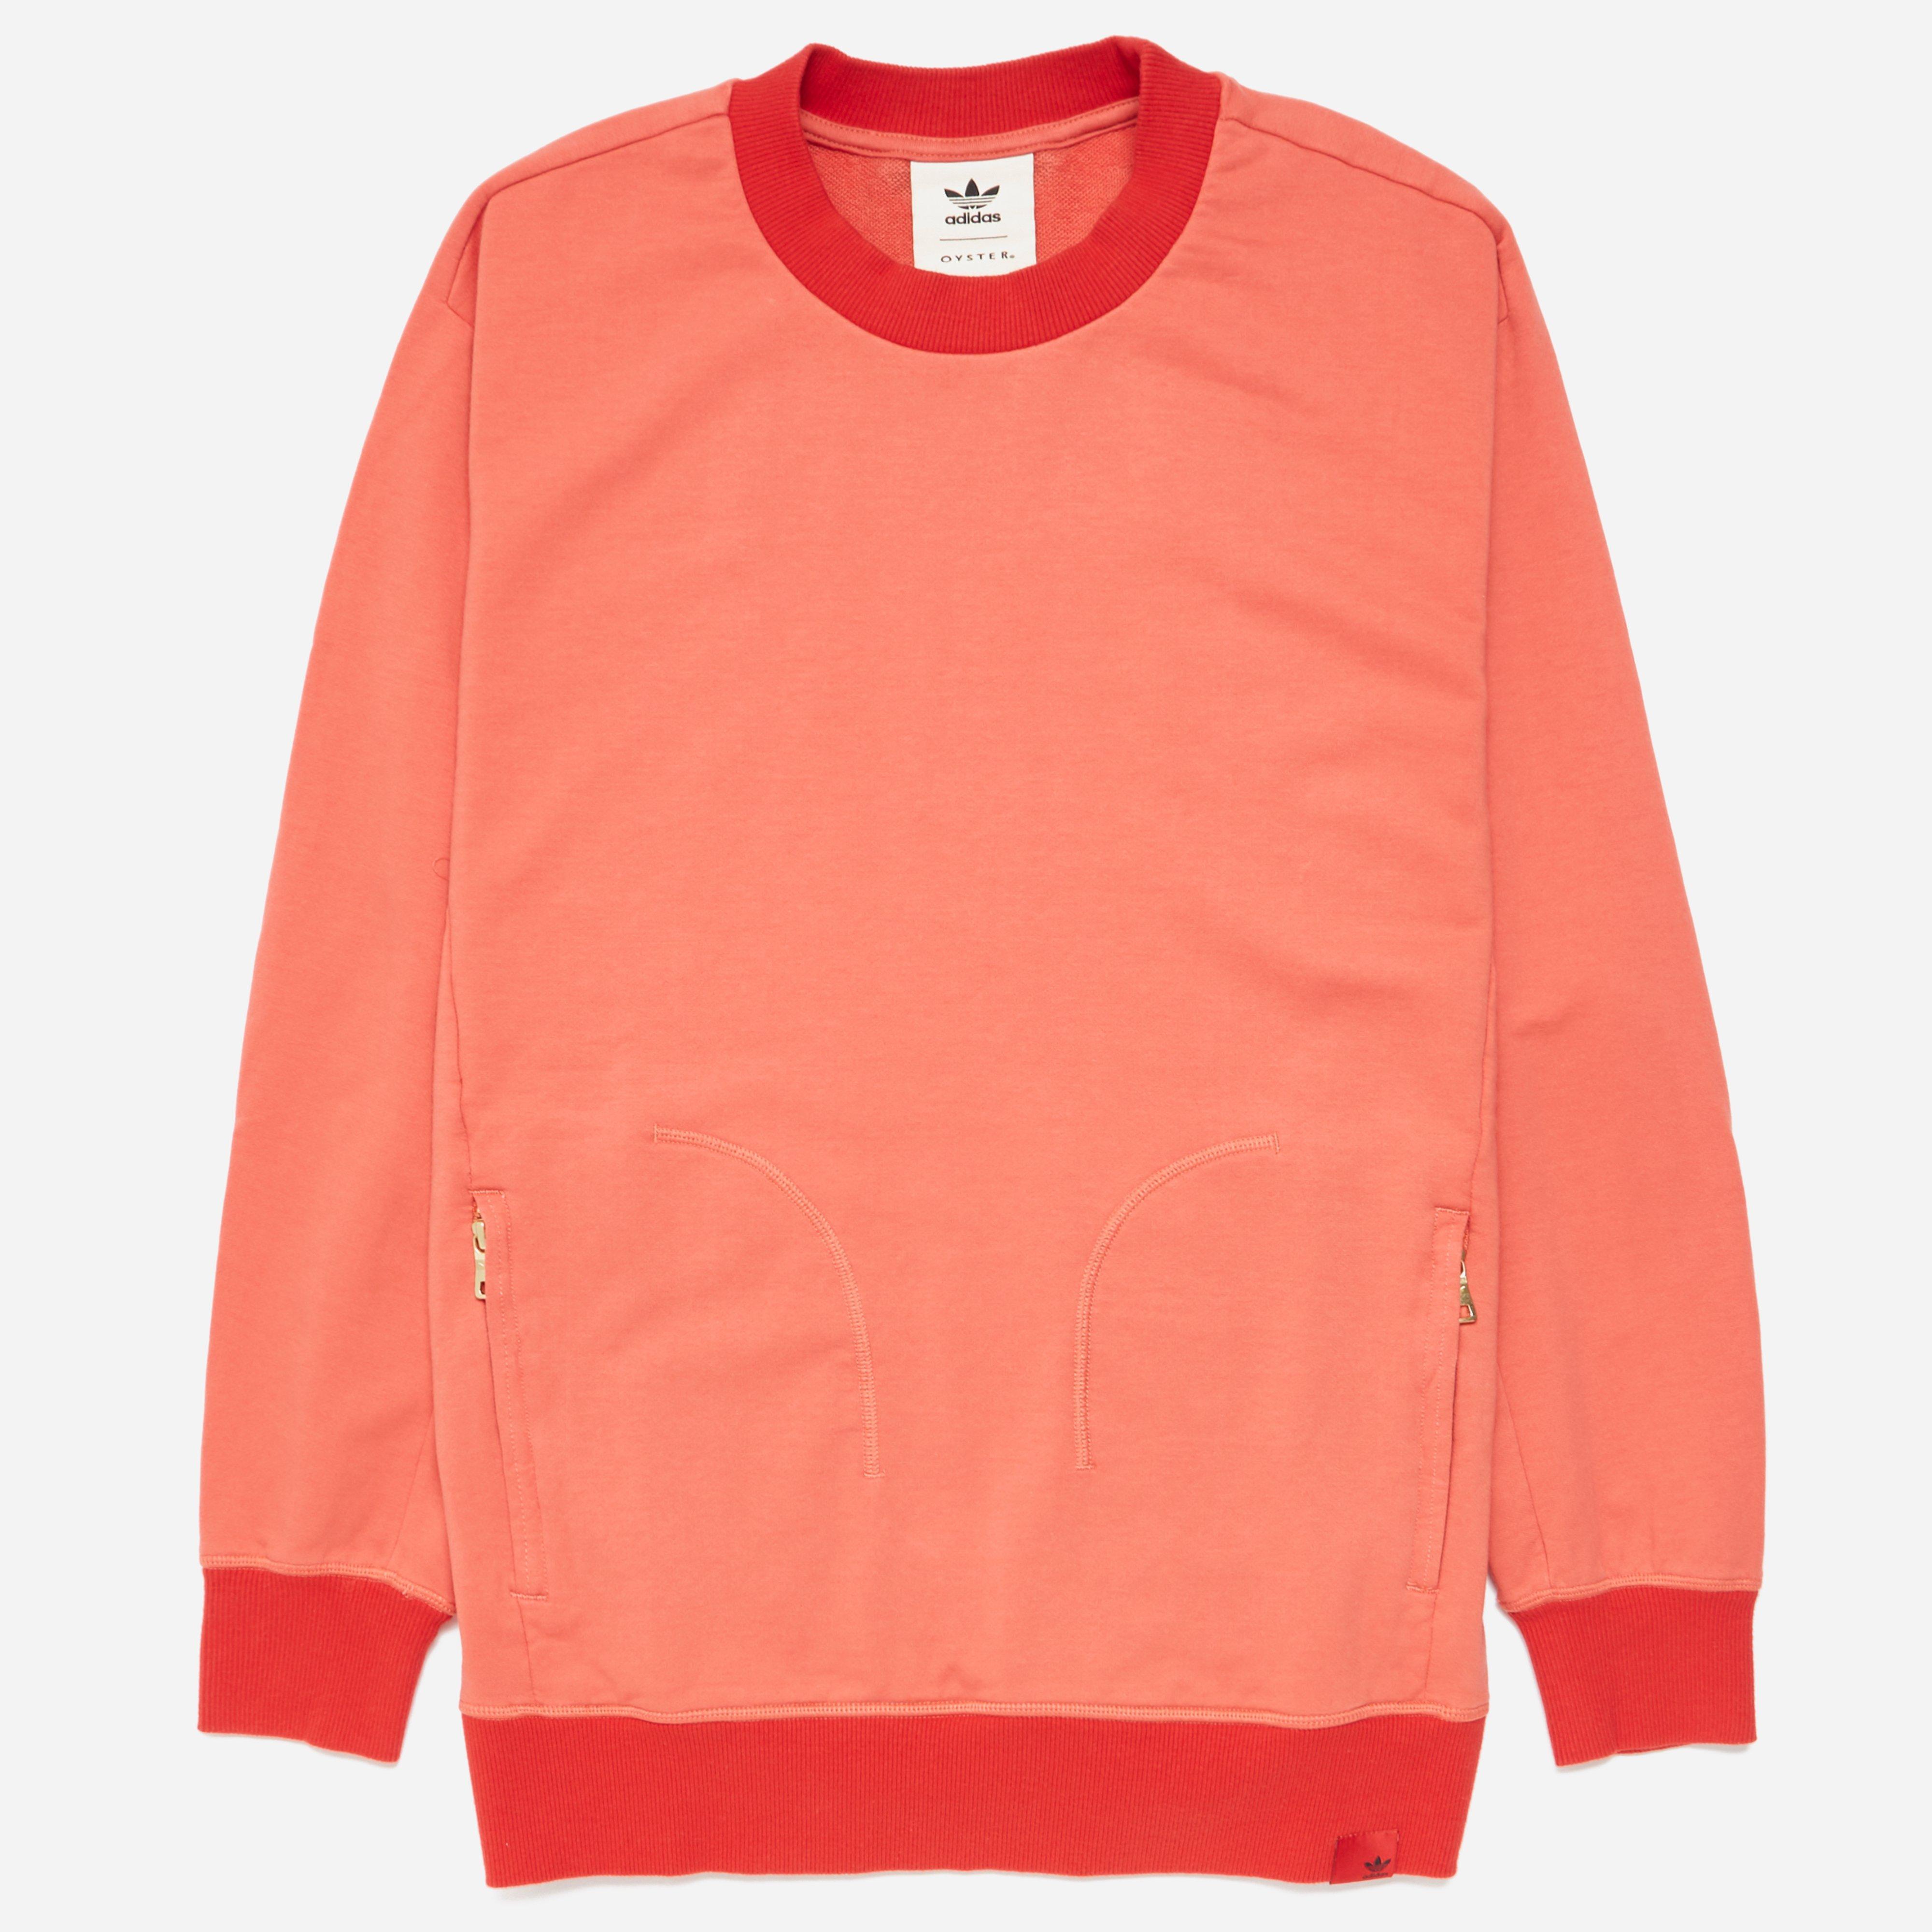 adidas Originals X Oyster Holdings Xbyo Crew Sweatshirt in Red for Men -  Lyst